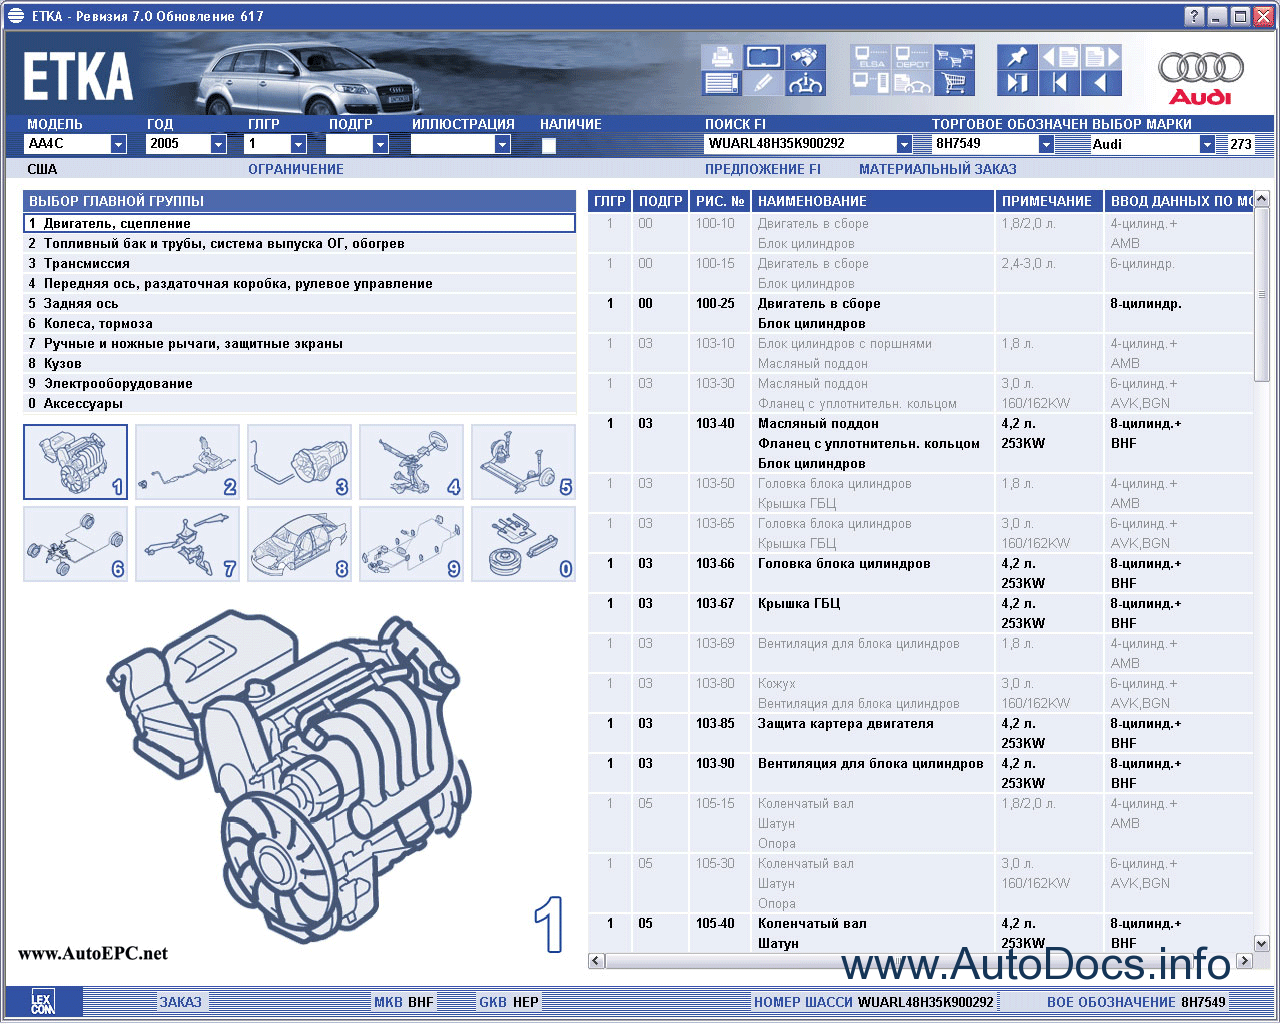 Audi VW Skoda Seat ETKA 7.2 spare parts catalogue contains